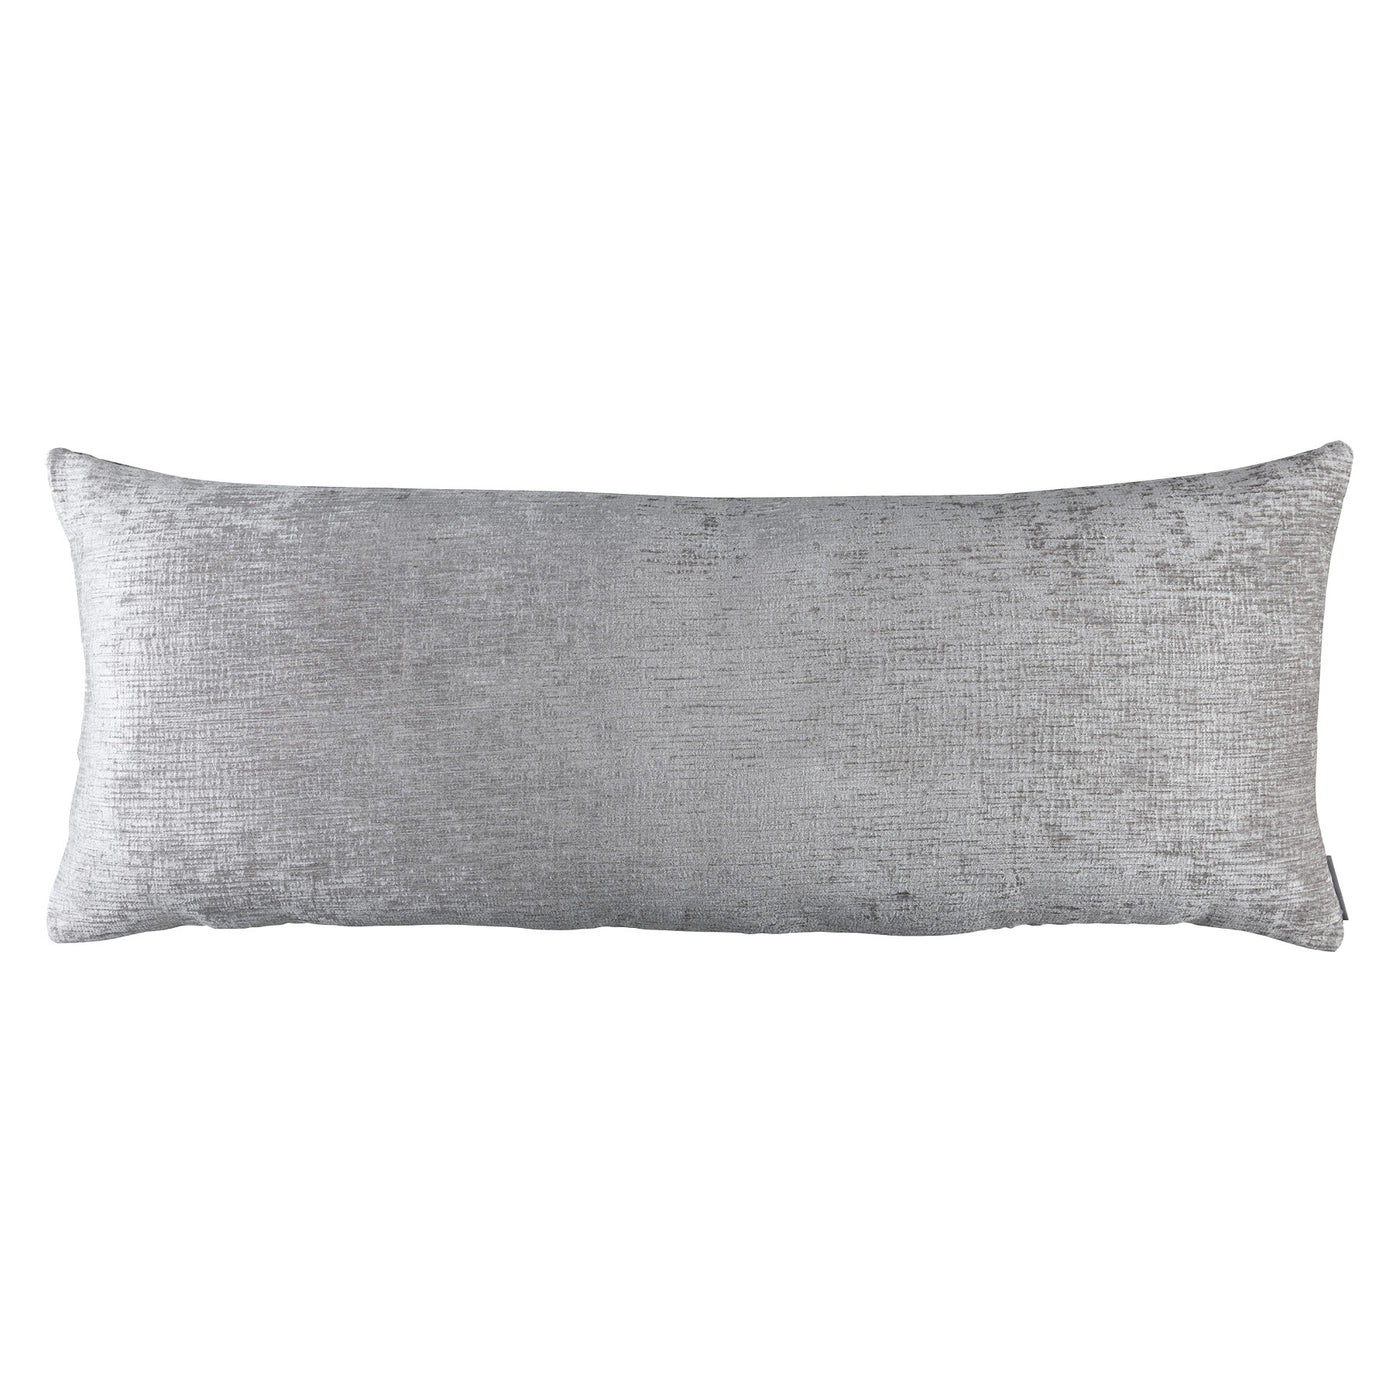 Ava Dove Long Rectangle Pillow (18x46)